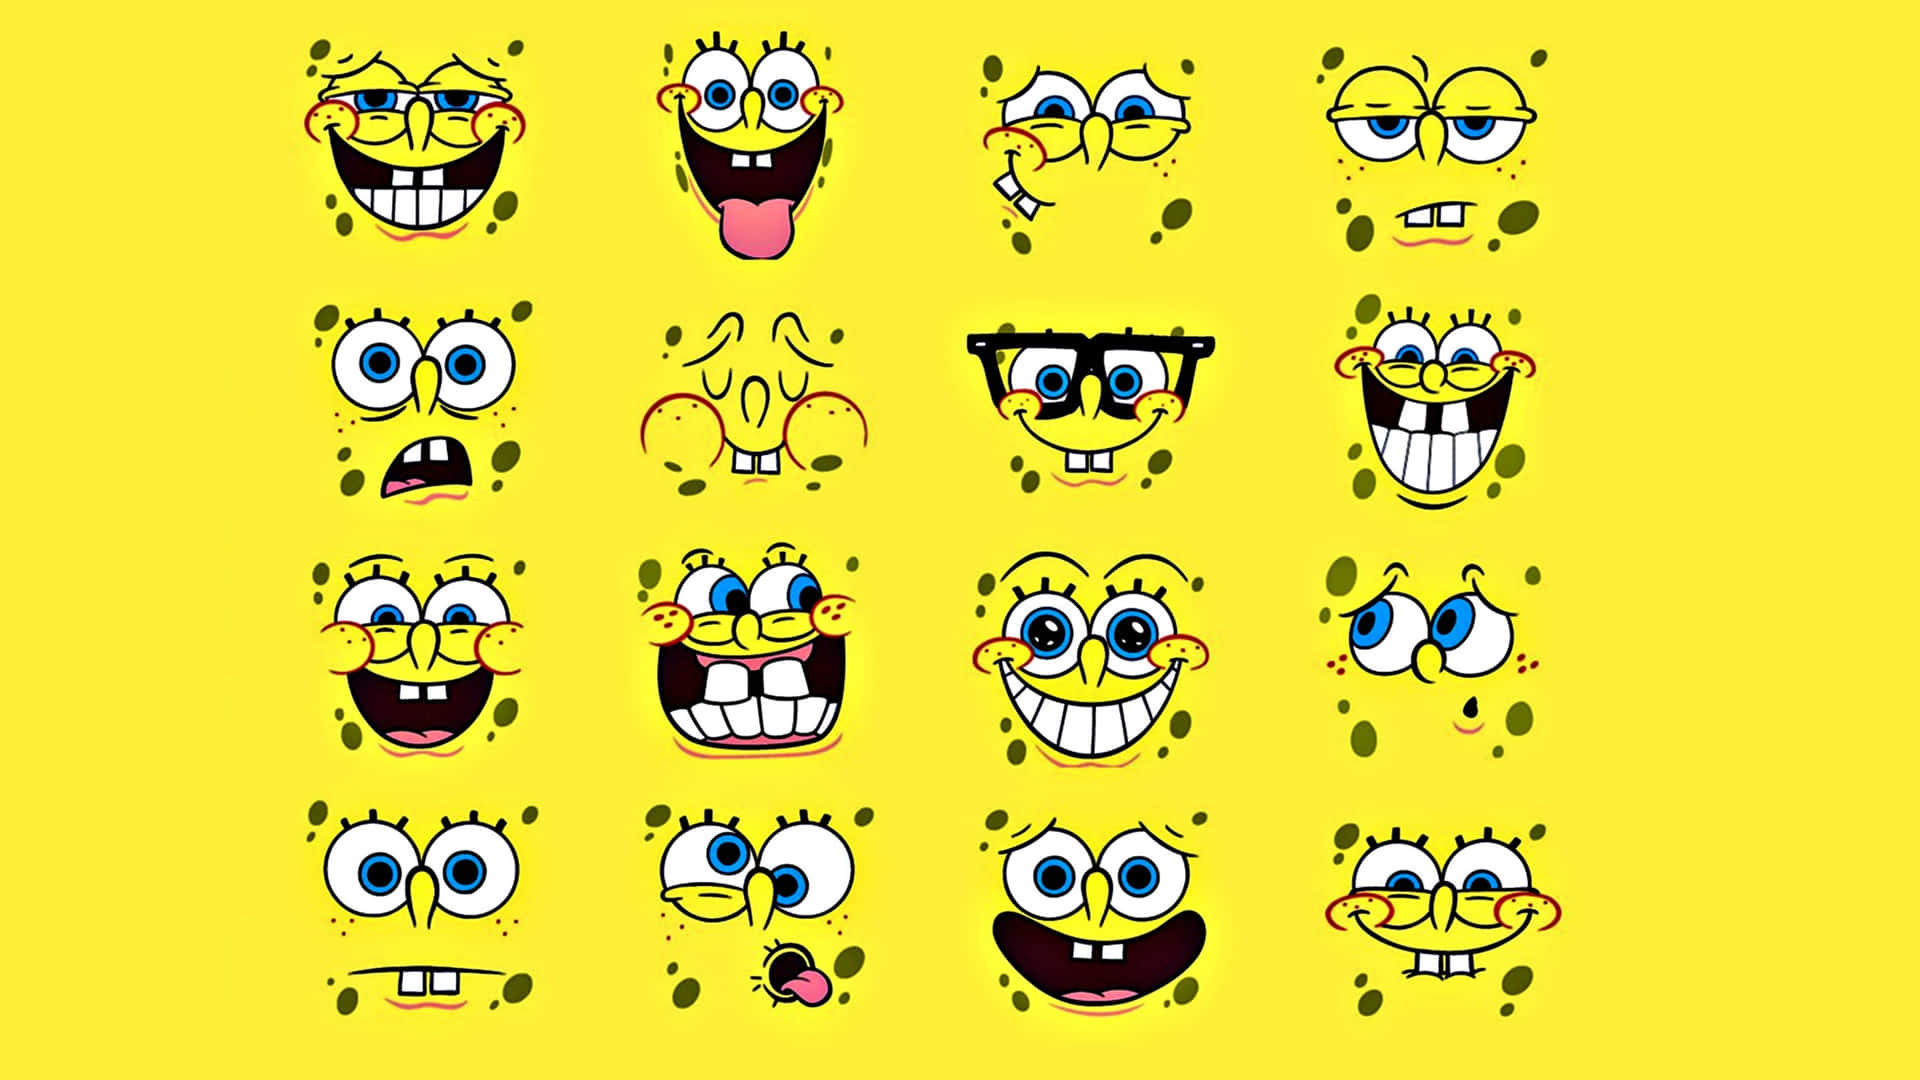 Aesthetic Spongebob Collage Smiling Laptop Wallpaper